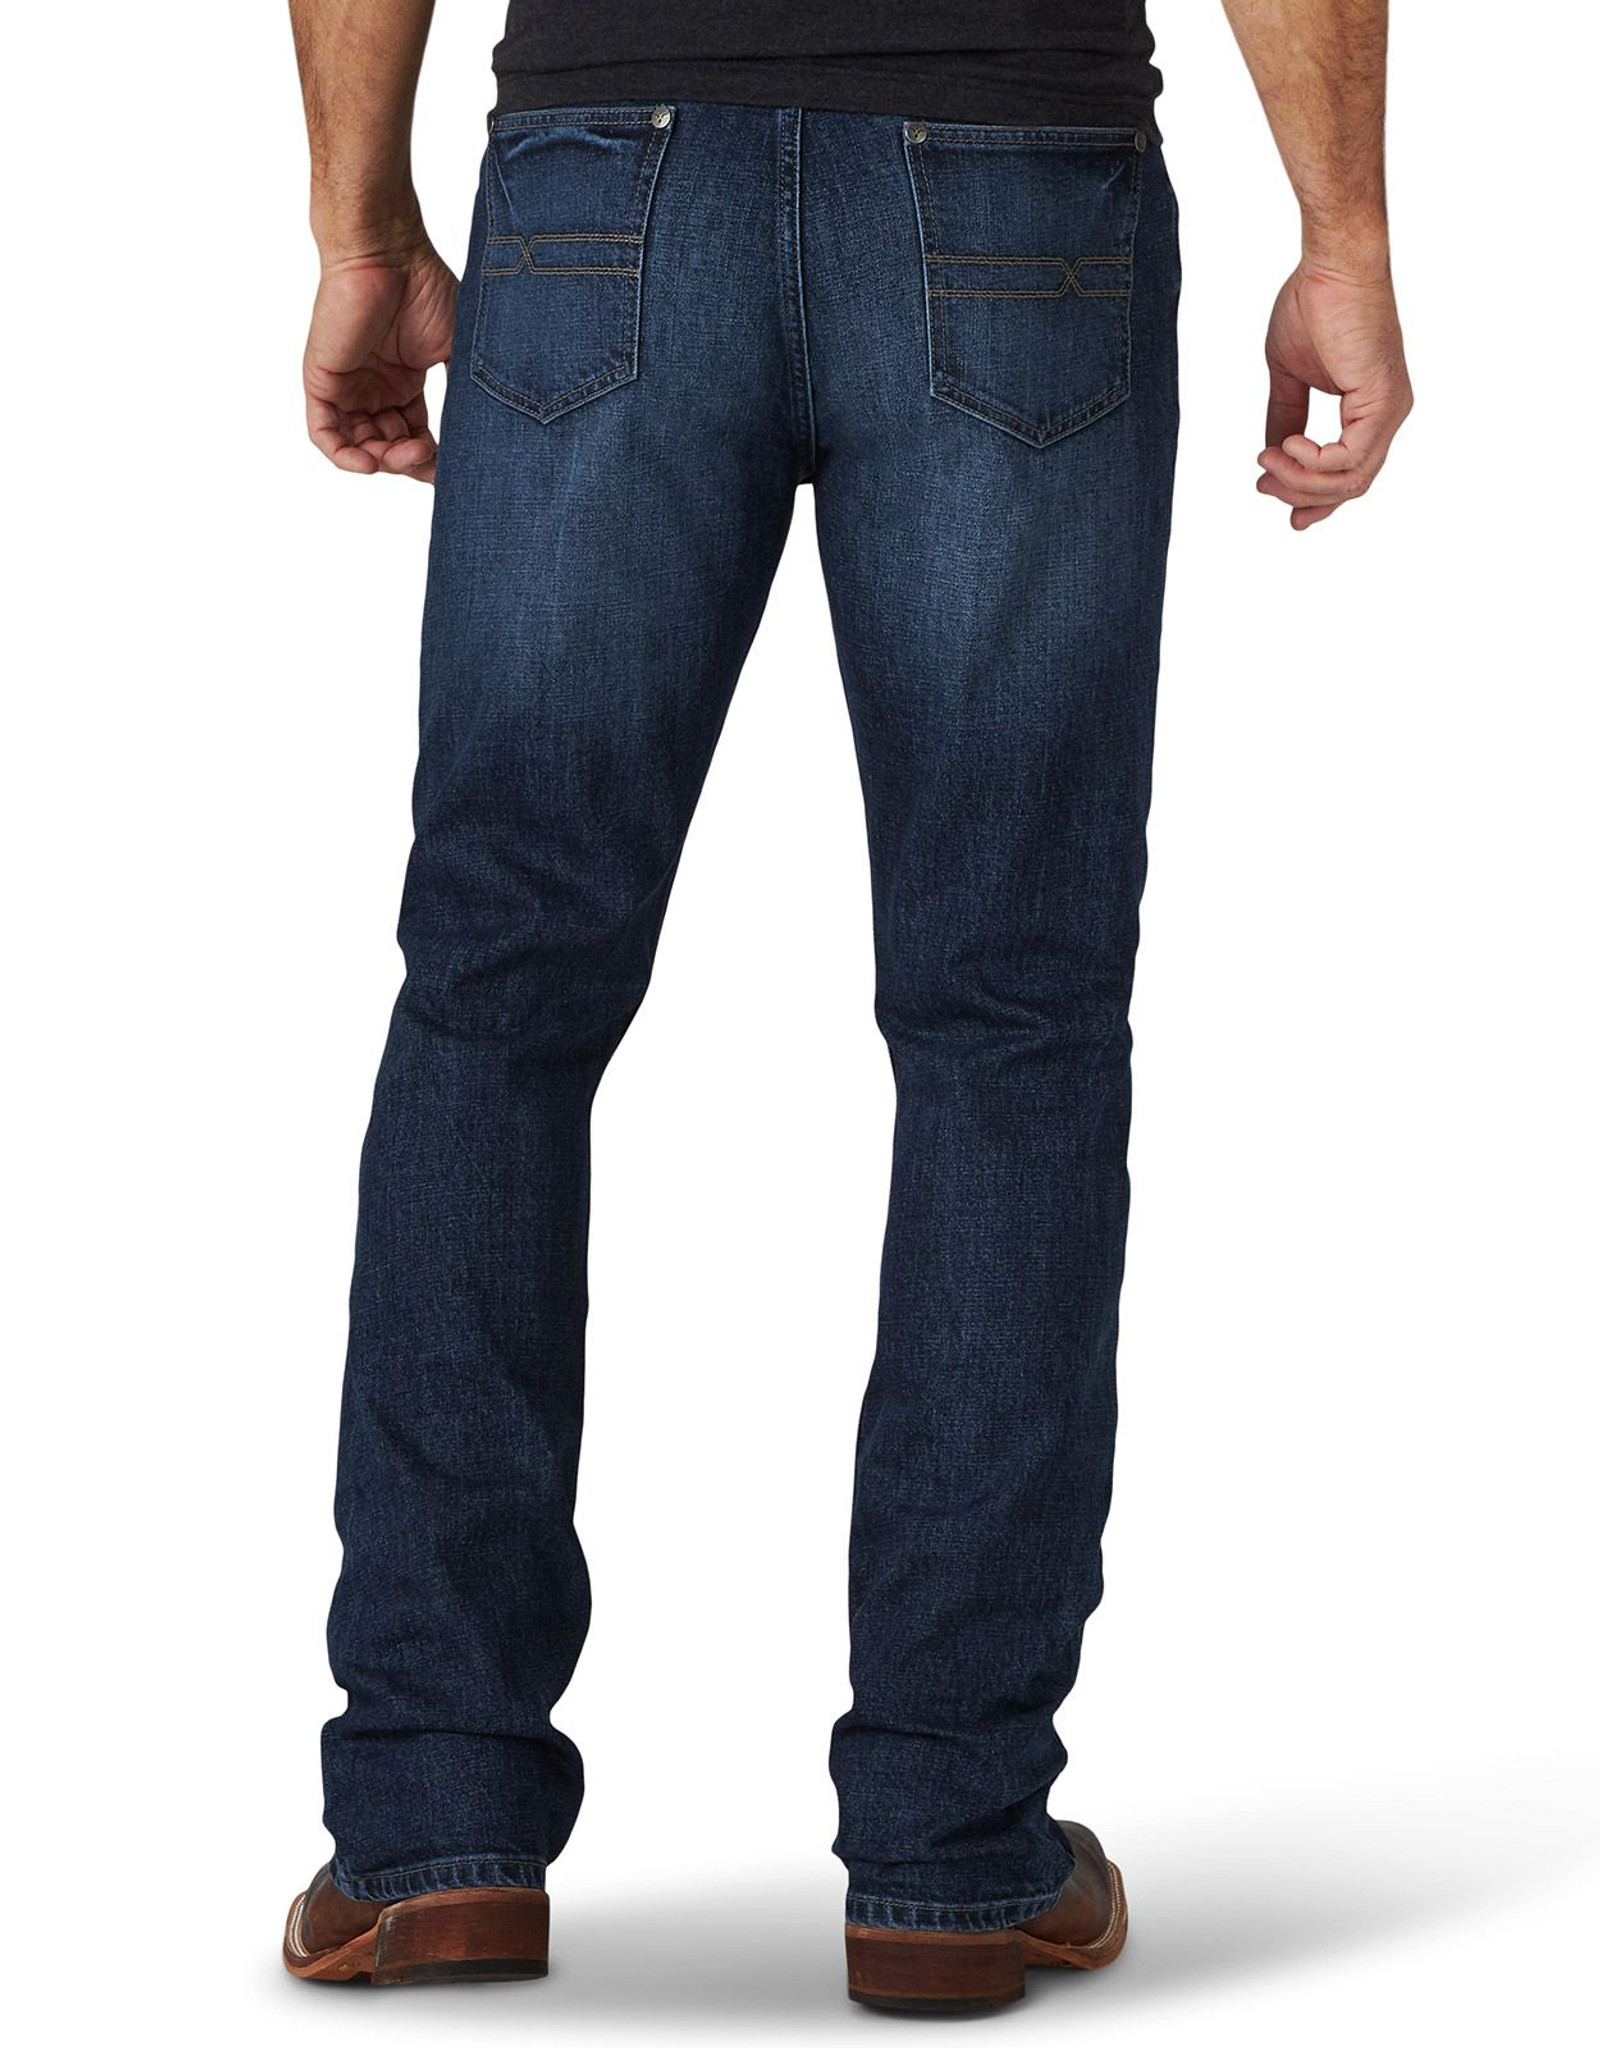 Wrangler Men's 42 Stretch Low Rise Slim Fit Boot Cut Jeans - Stockyard